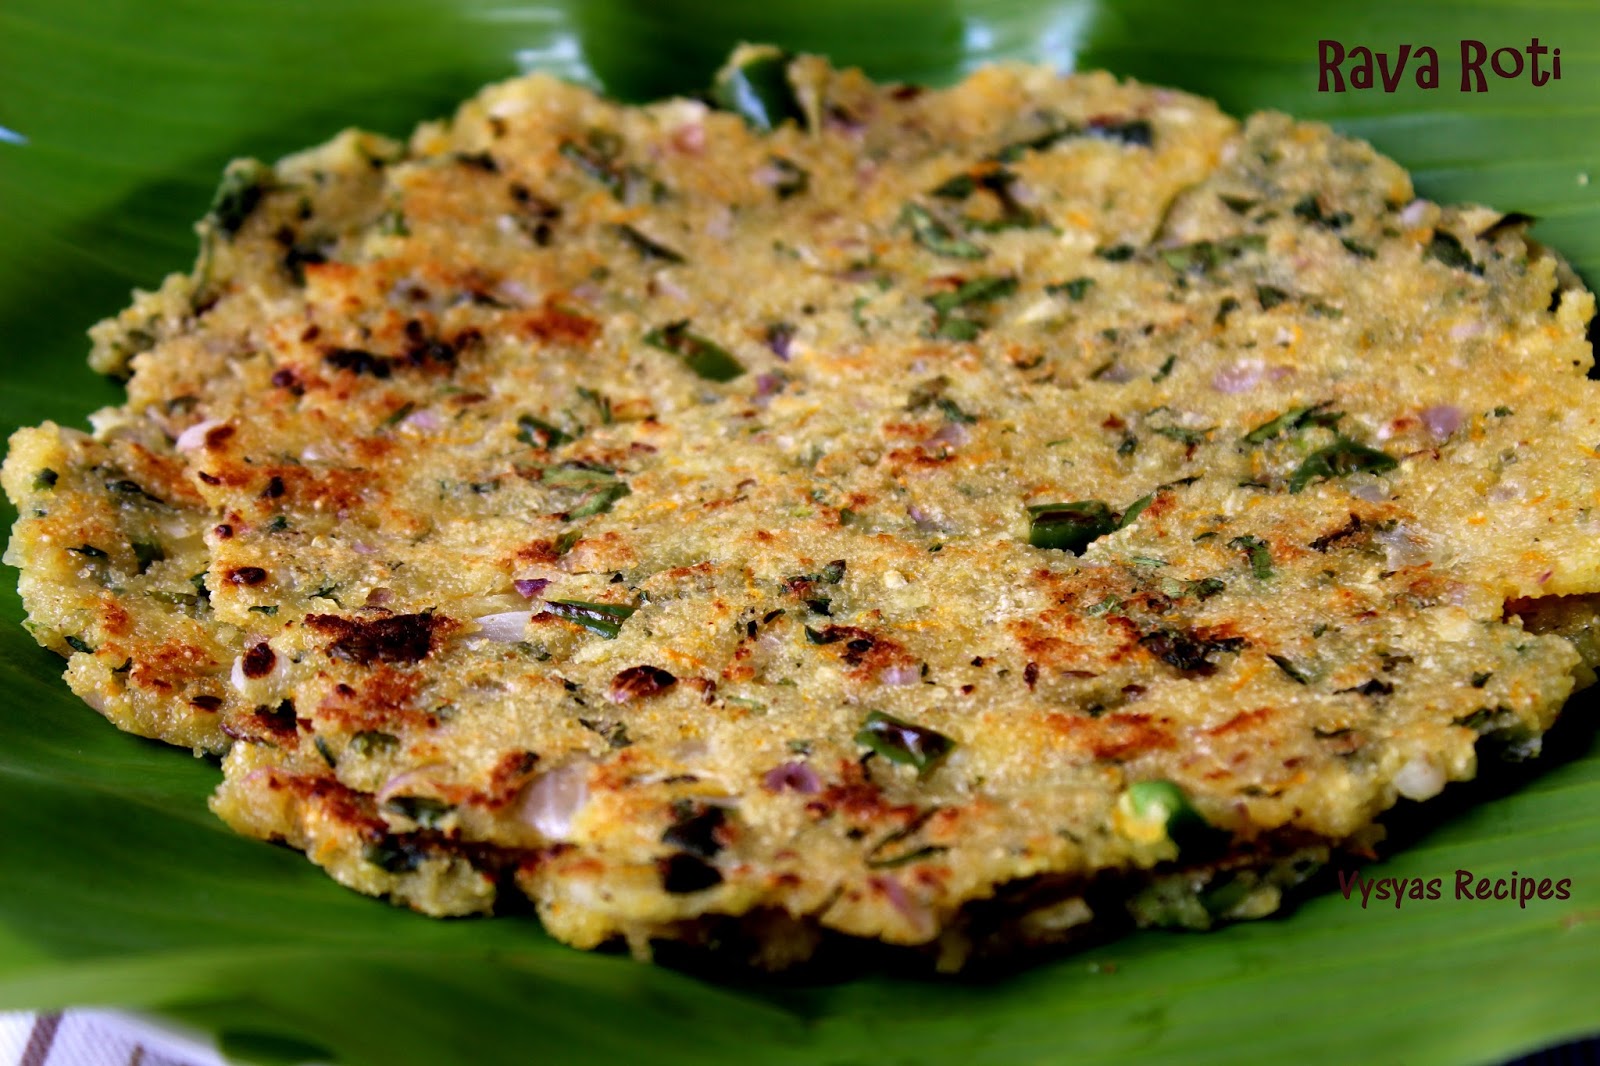 Vysya's Delicious Recipes: Rava Roti - (karnataka style) - Sooji Roti